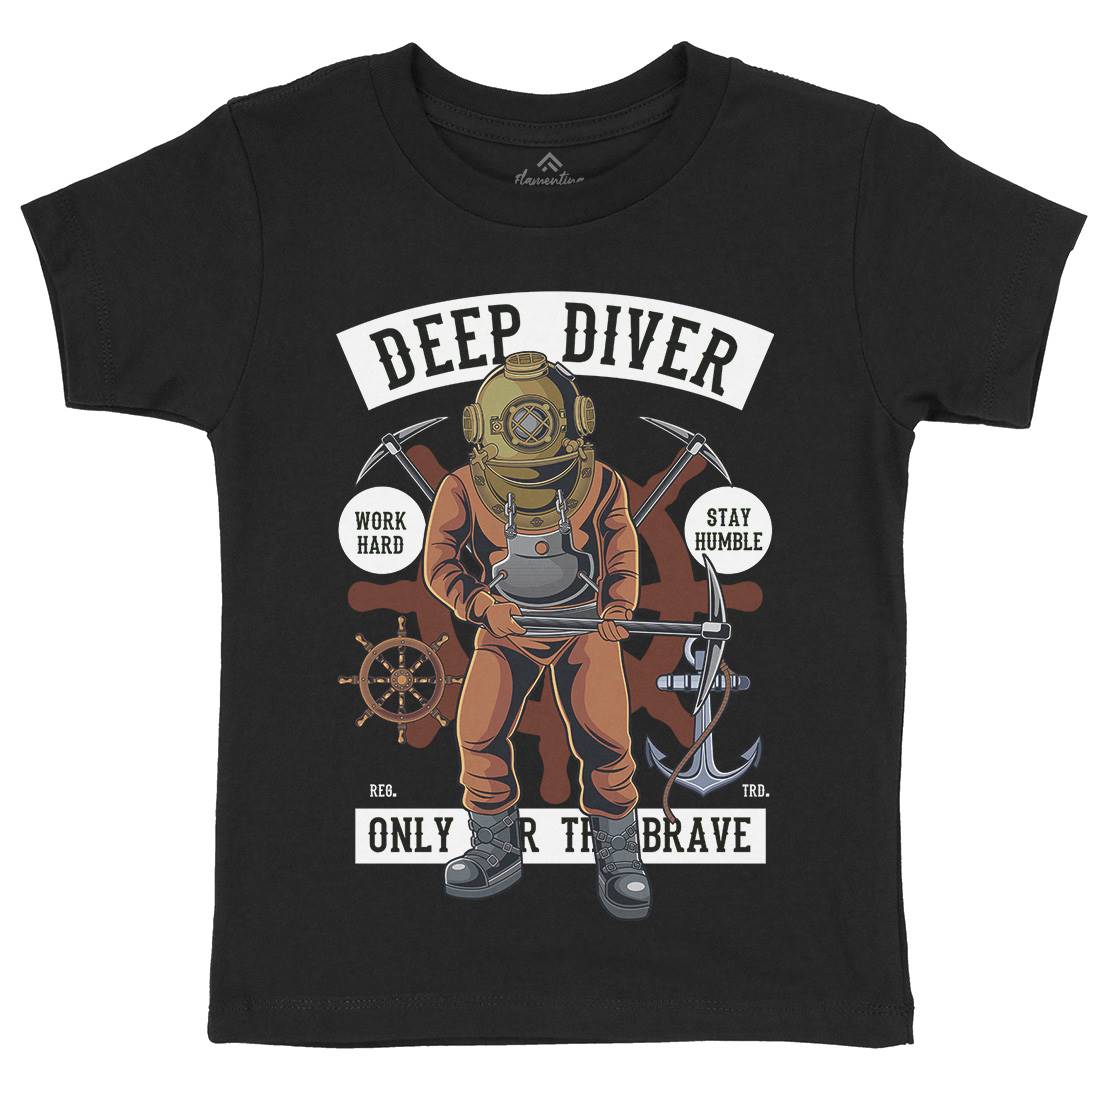 Diver Kids Organic Crew Neck T-Shirt Navy C337